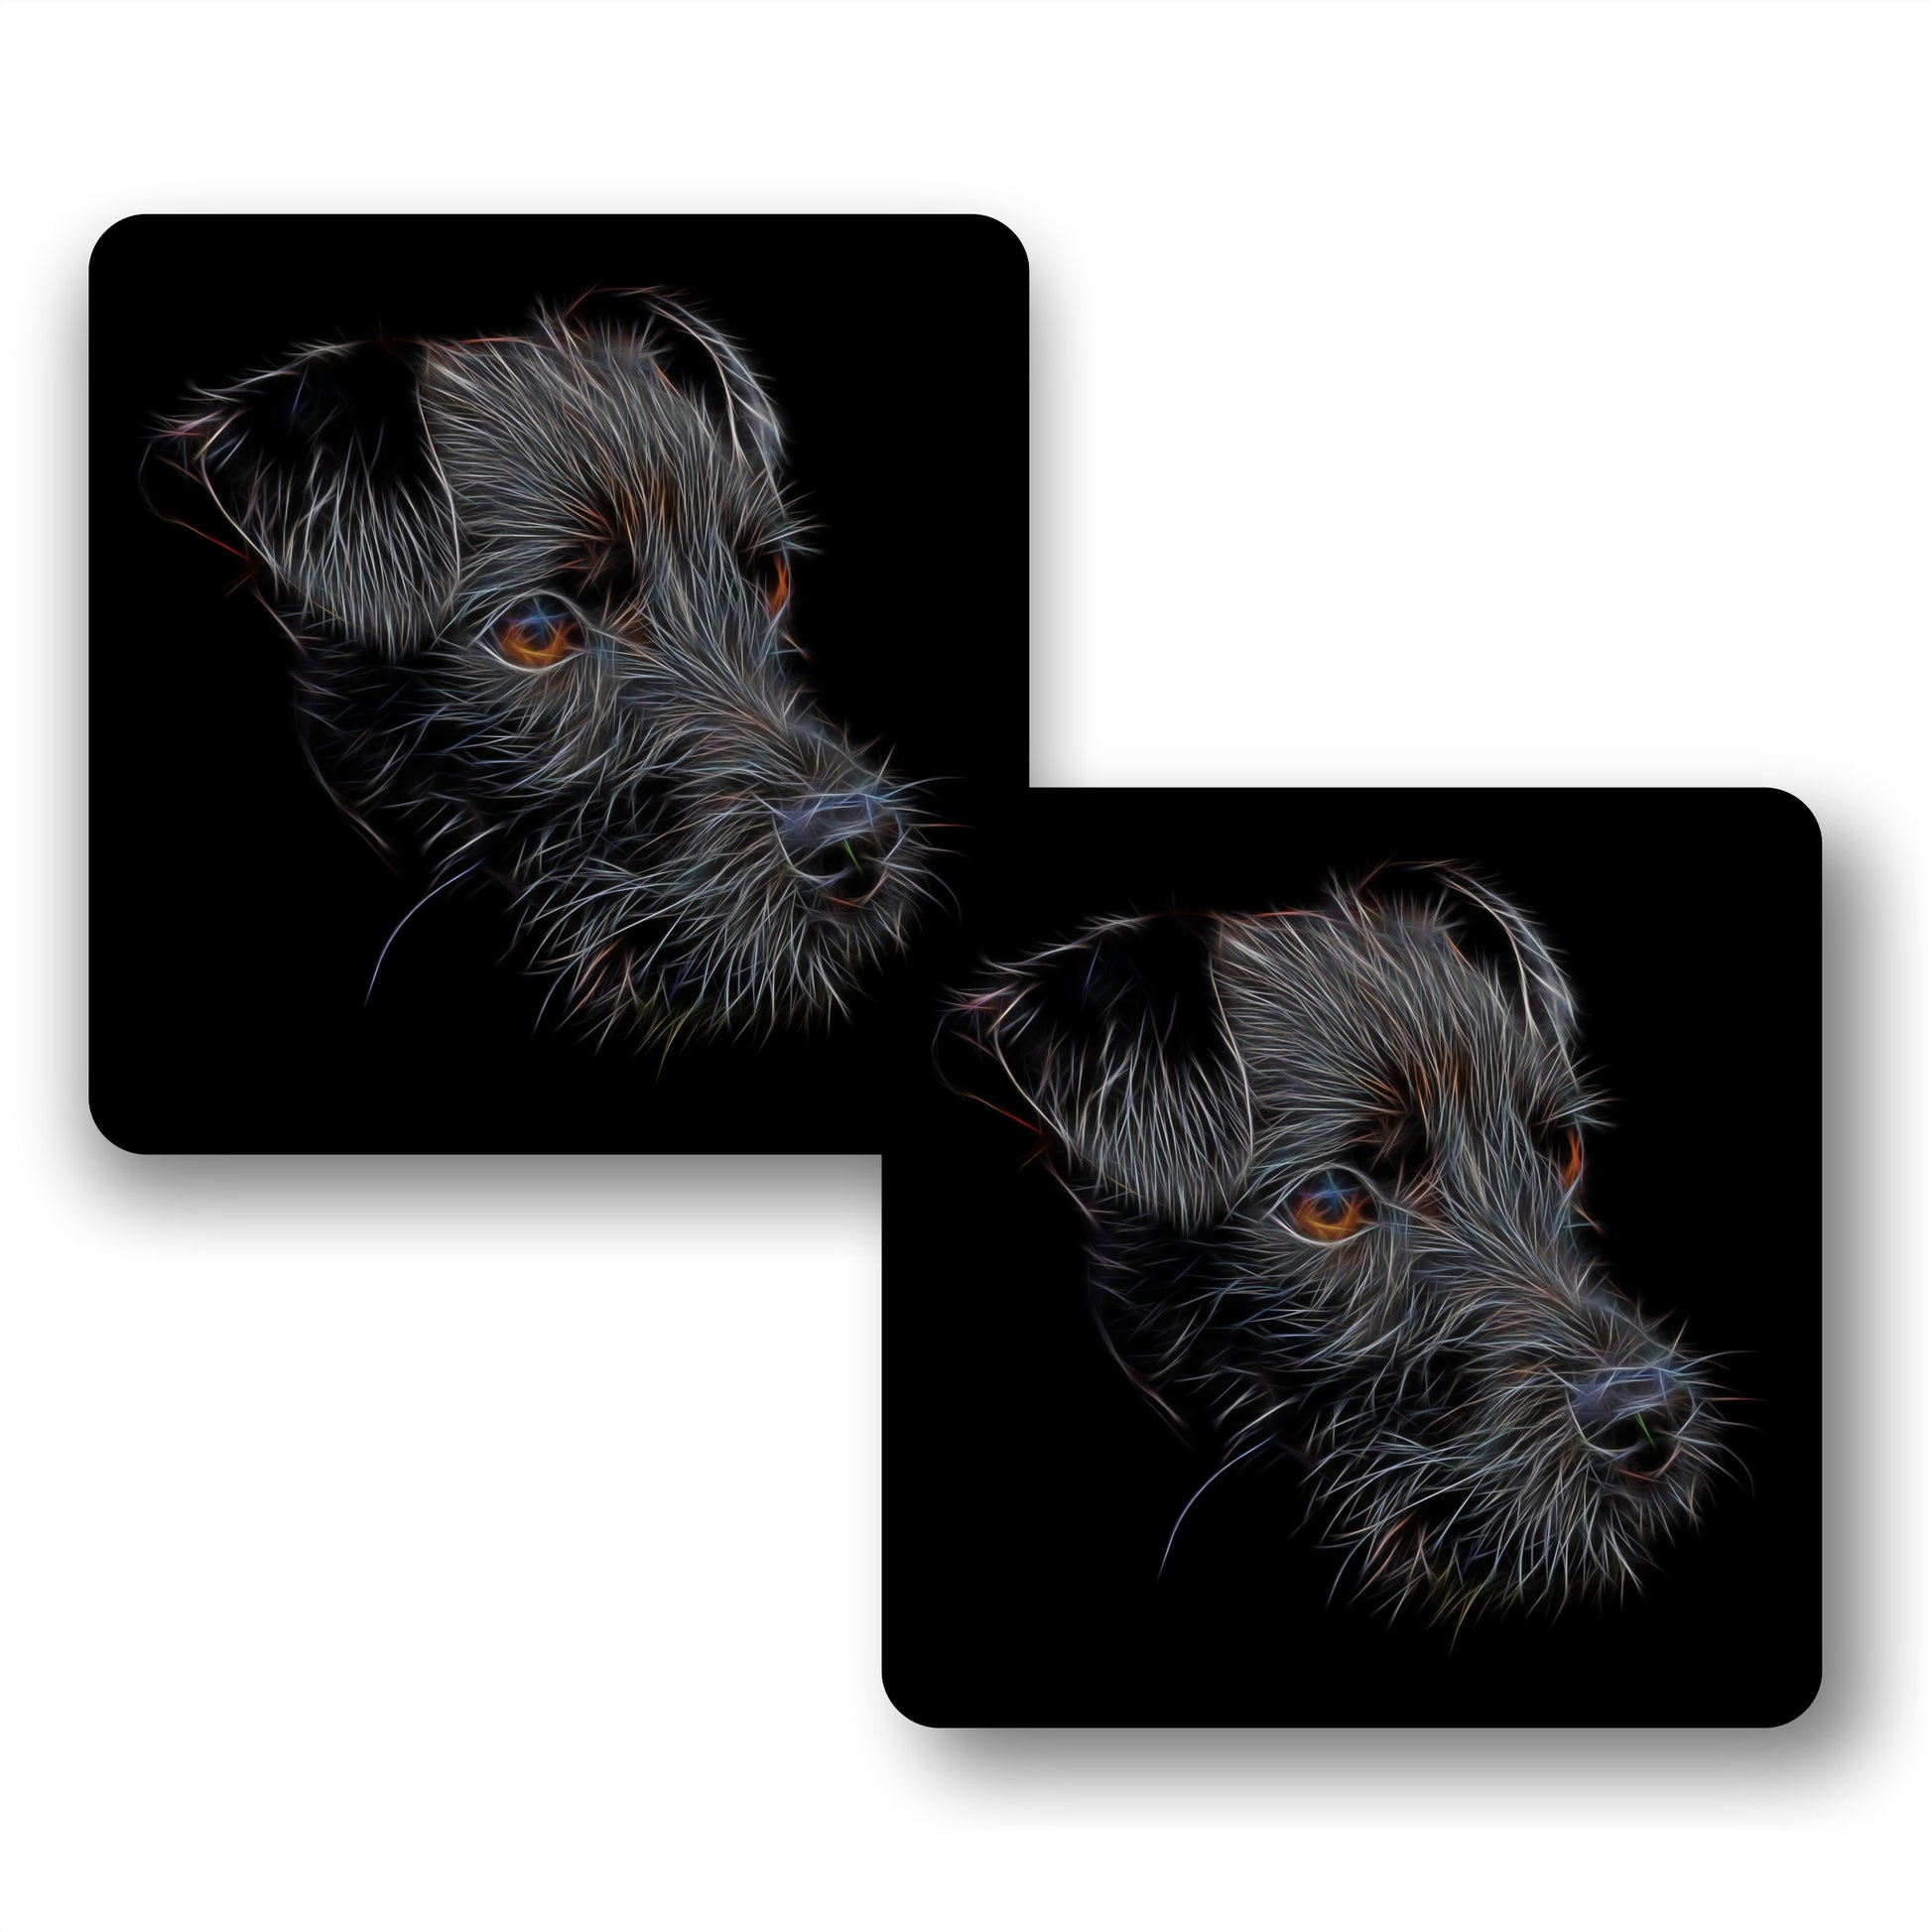 Black Patterdale Terrier Coasters, Set of 2, with Stunning Fractal Art Design.